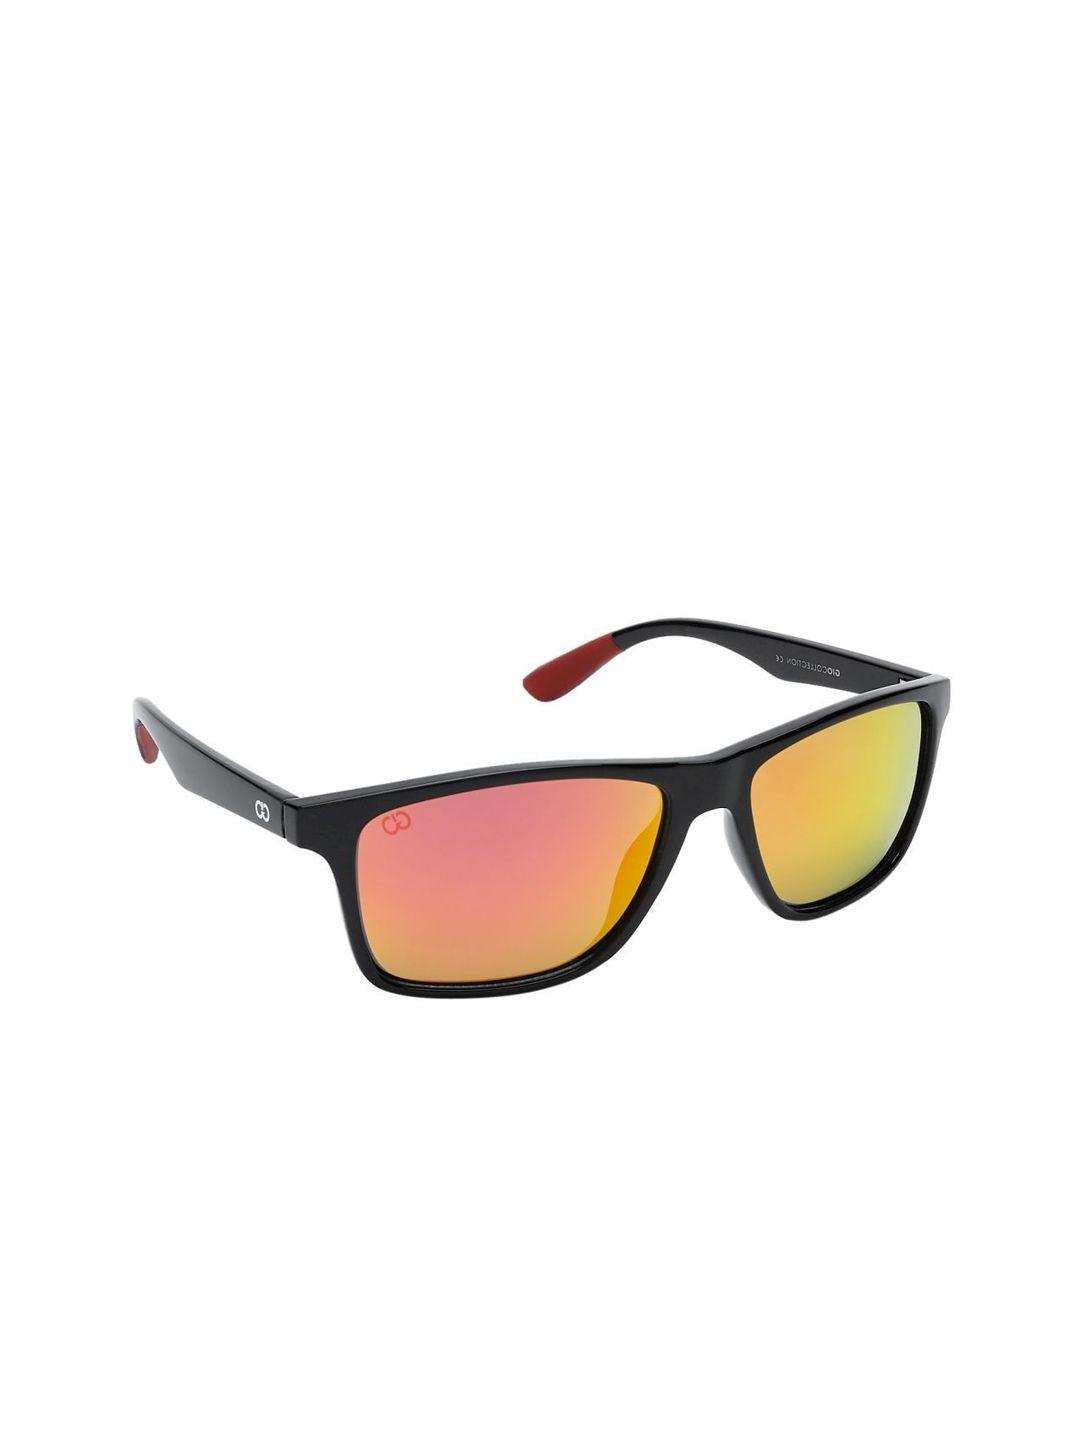 gio collection unisex wayfarer sunglasses gm8063c01